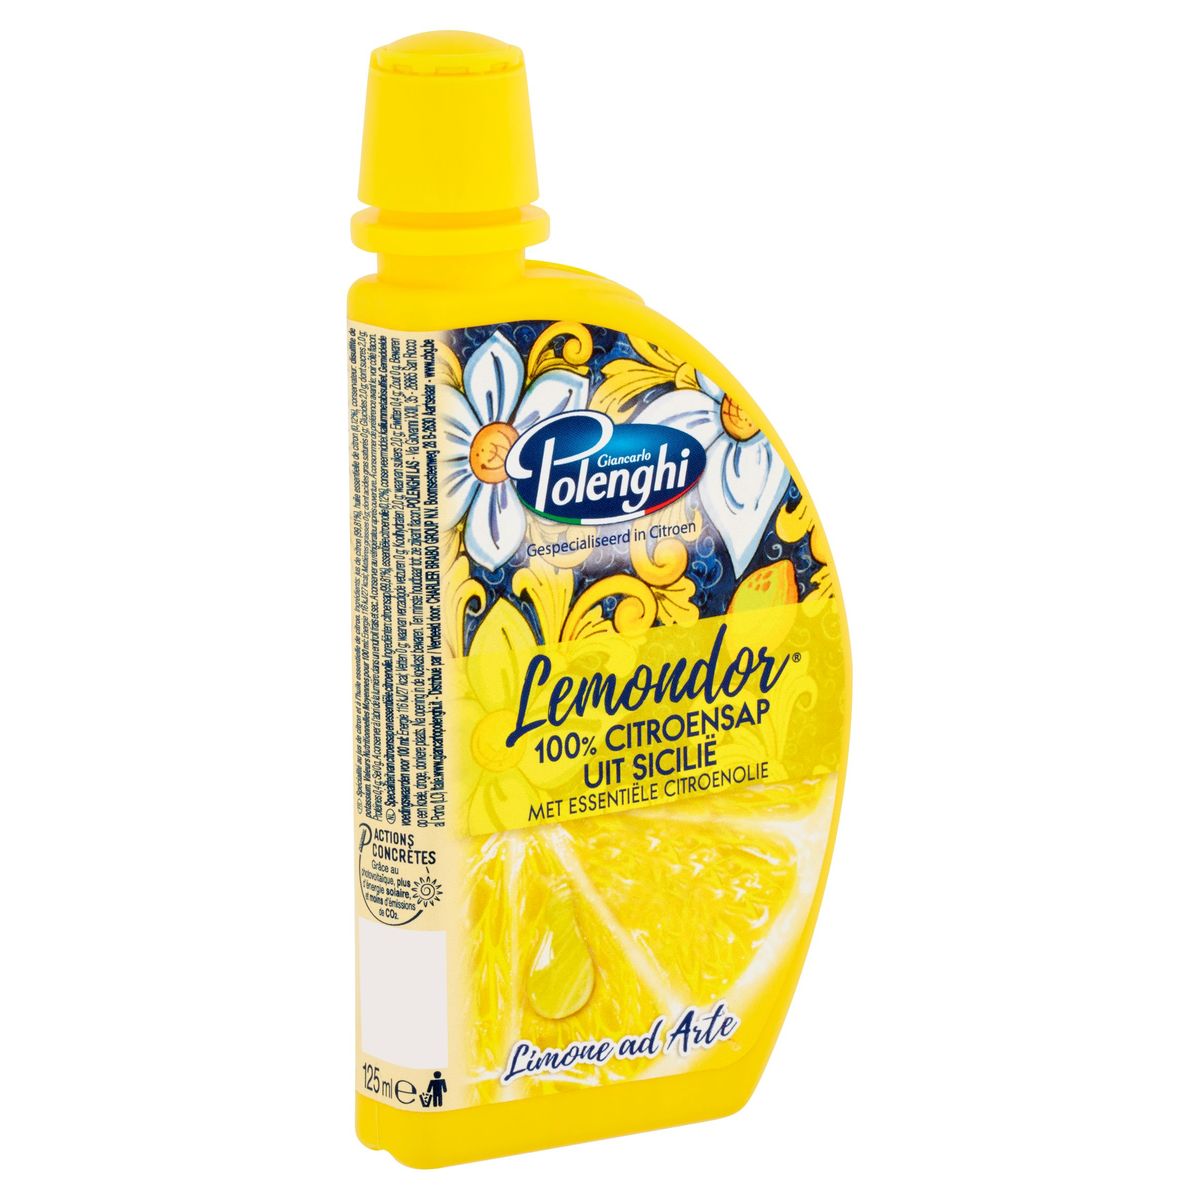 Lemondor 100% Citroensap uit Sicilië met Essentiële Citroenolie 125ml